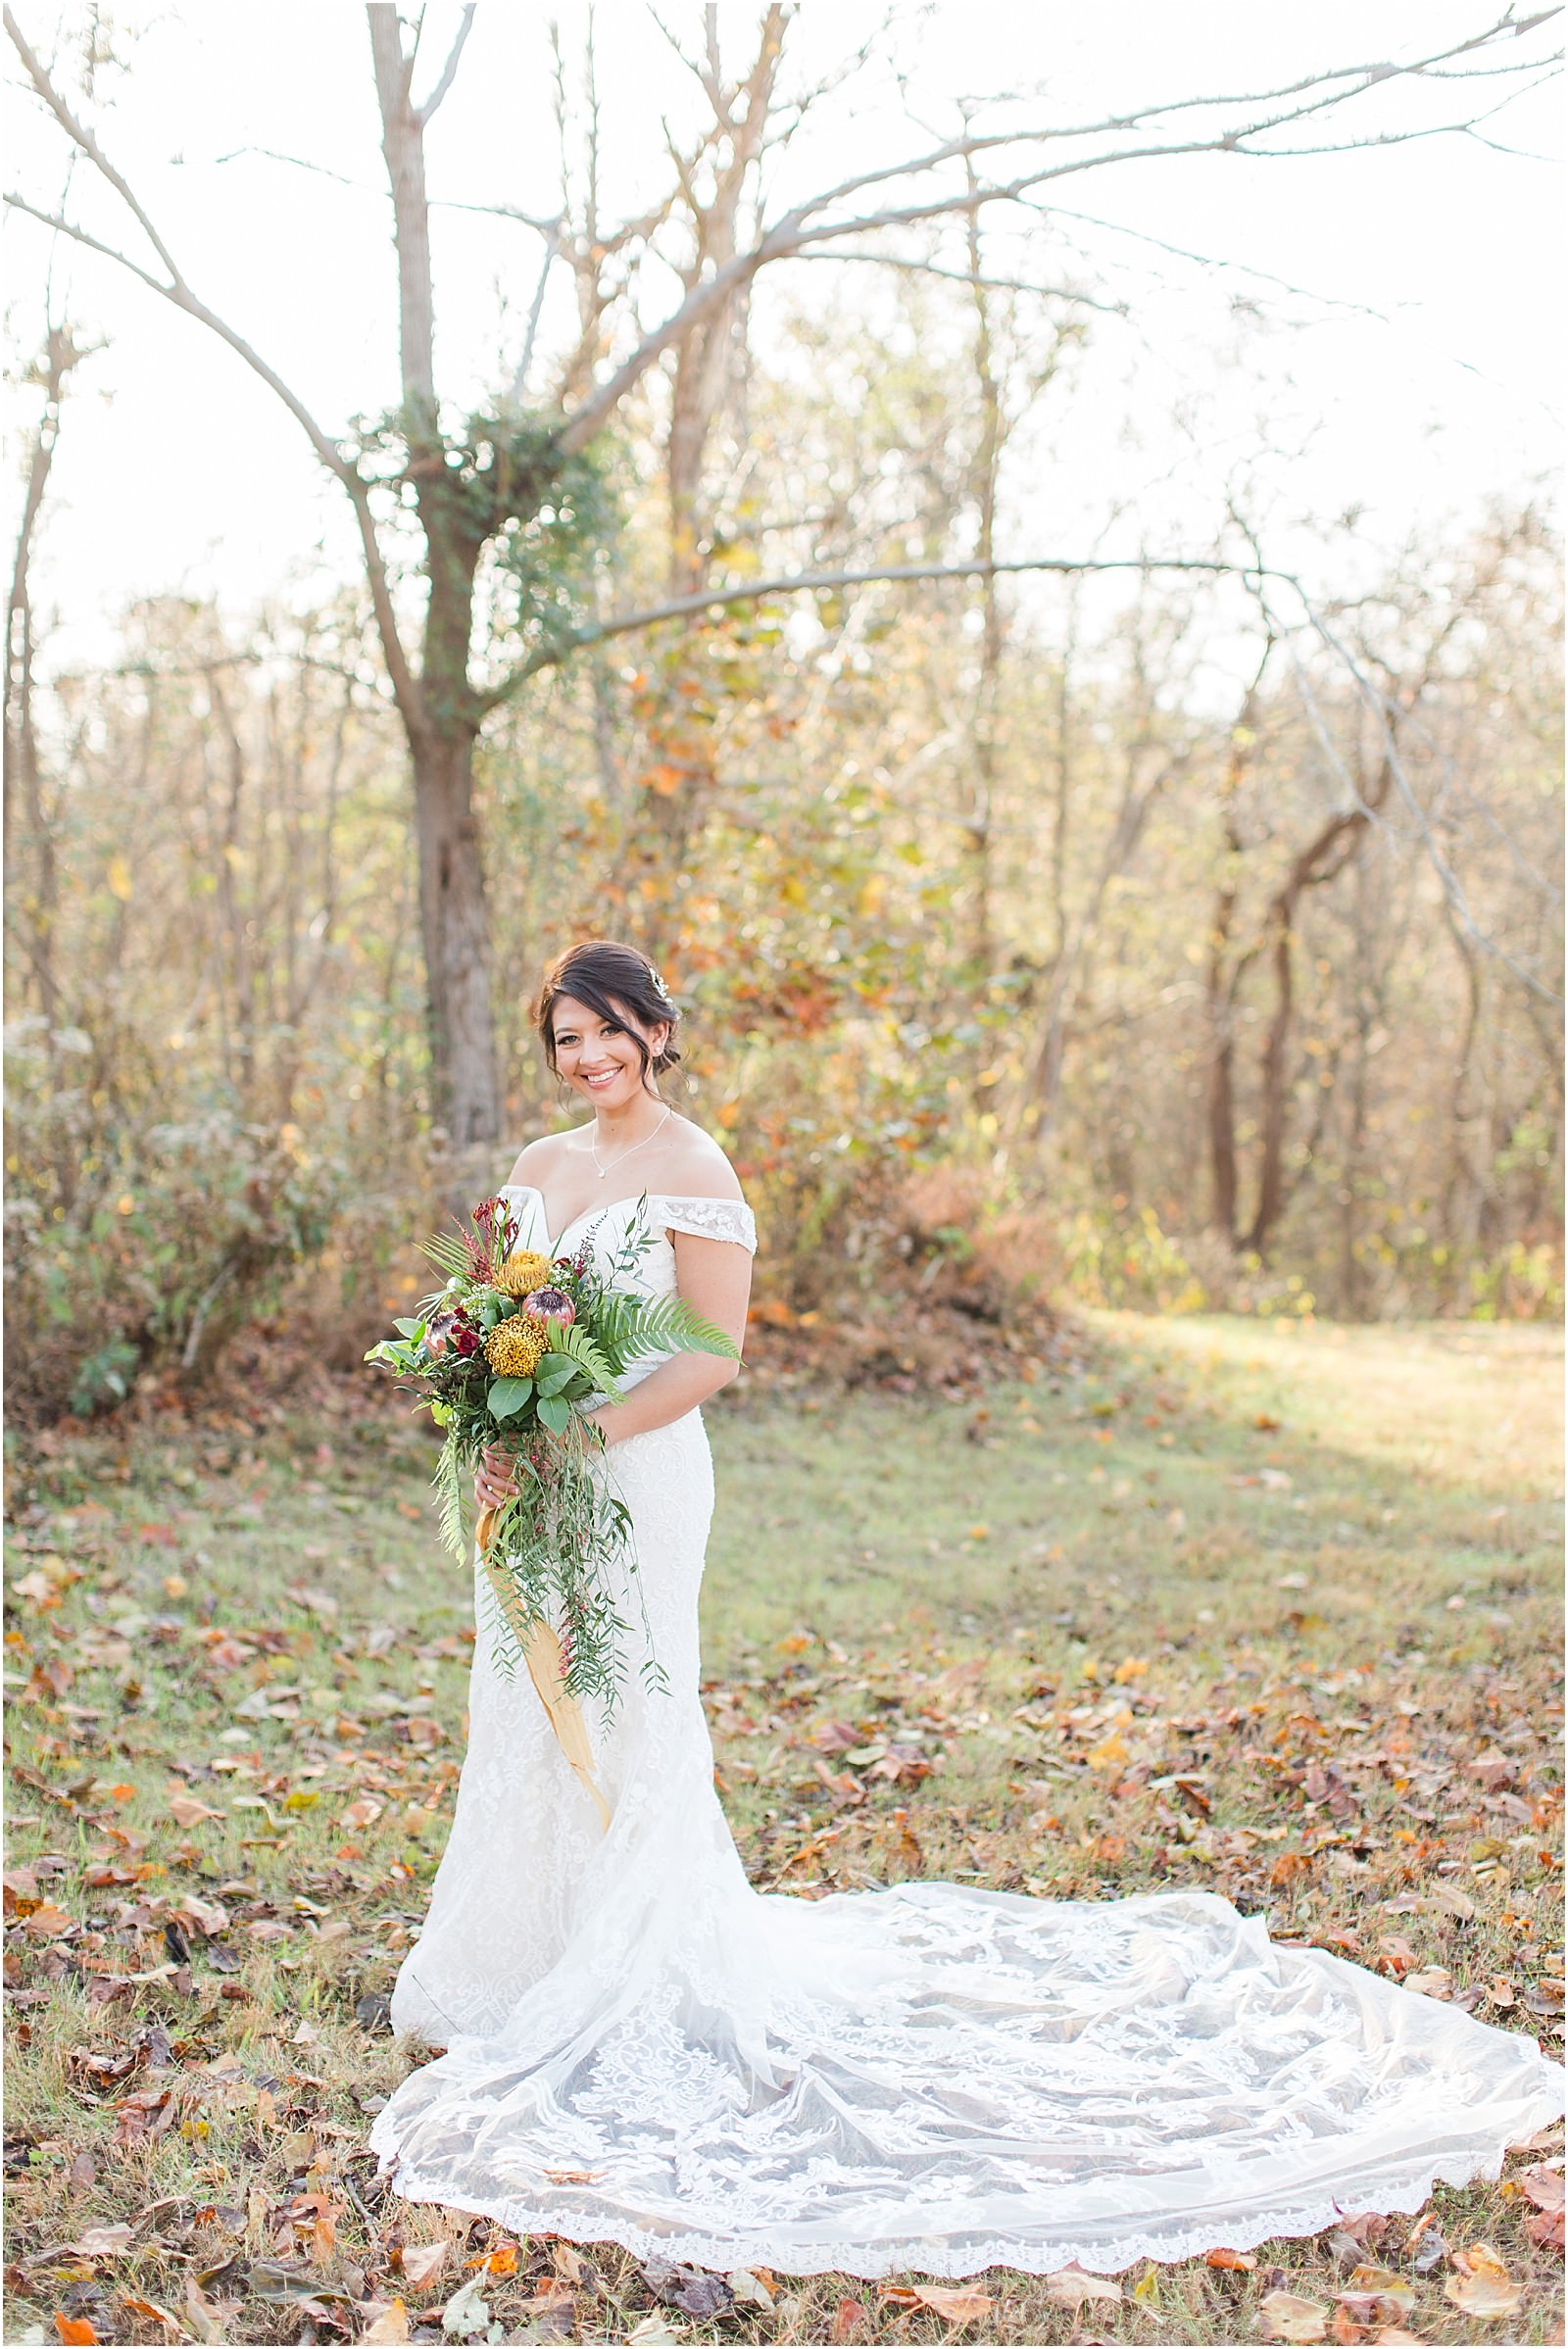 Walker and Alyssa's intimate fall wedding in Southern Indiana. | Wedding Photography | The Corner House Wedding | Southern Indiana Wedding | #fallwedding #intimatewedding | 050.jpg